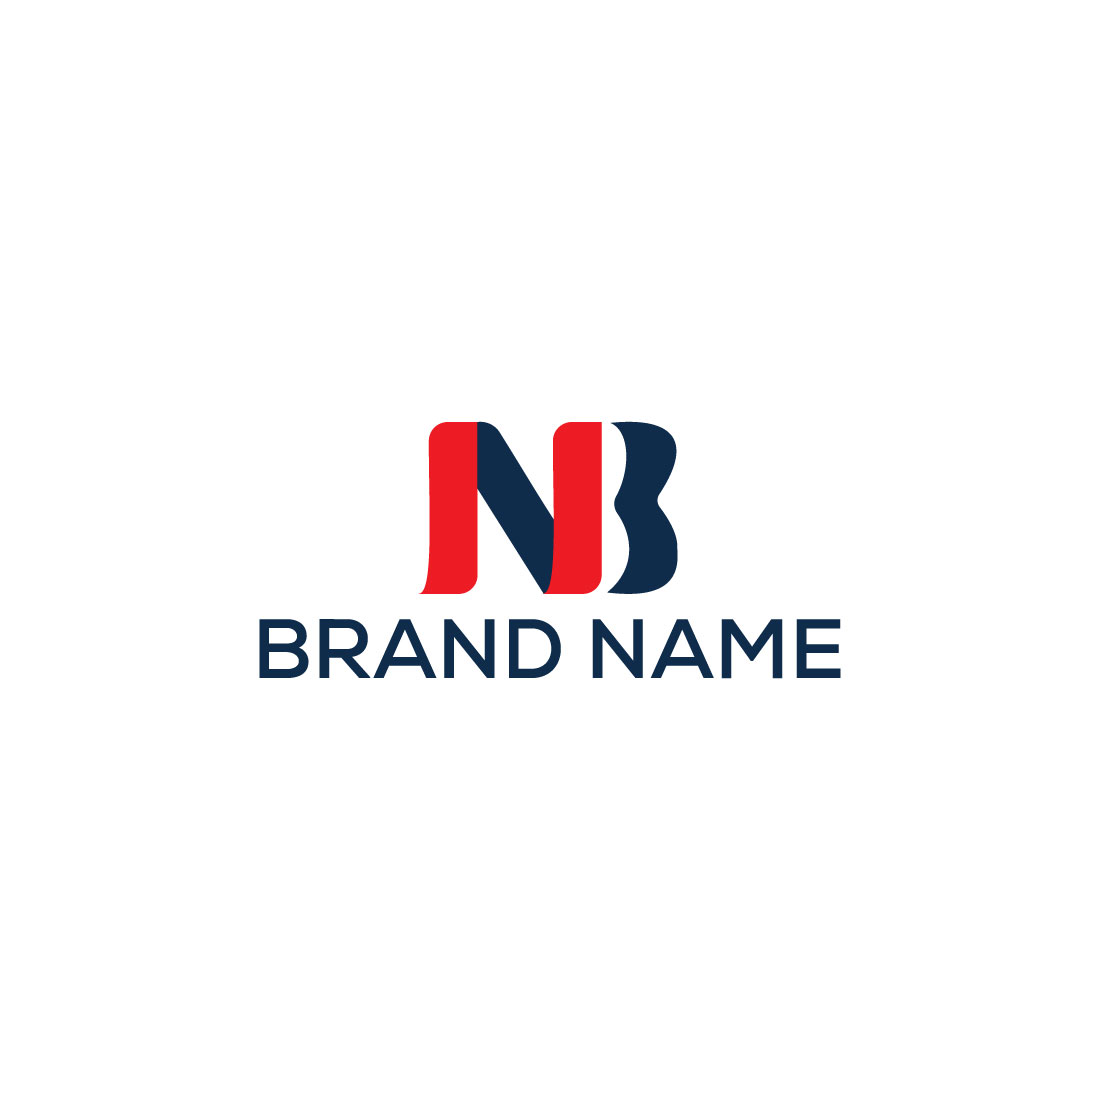 BN,NB Letter Logo Design cover image.